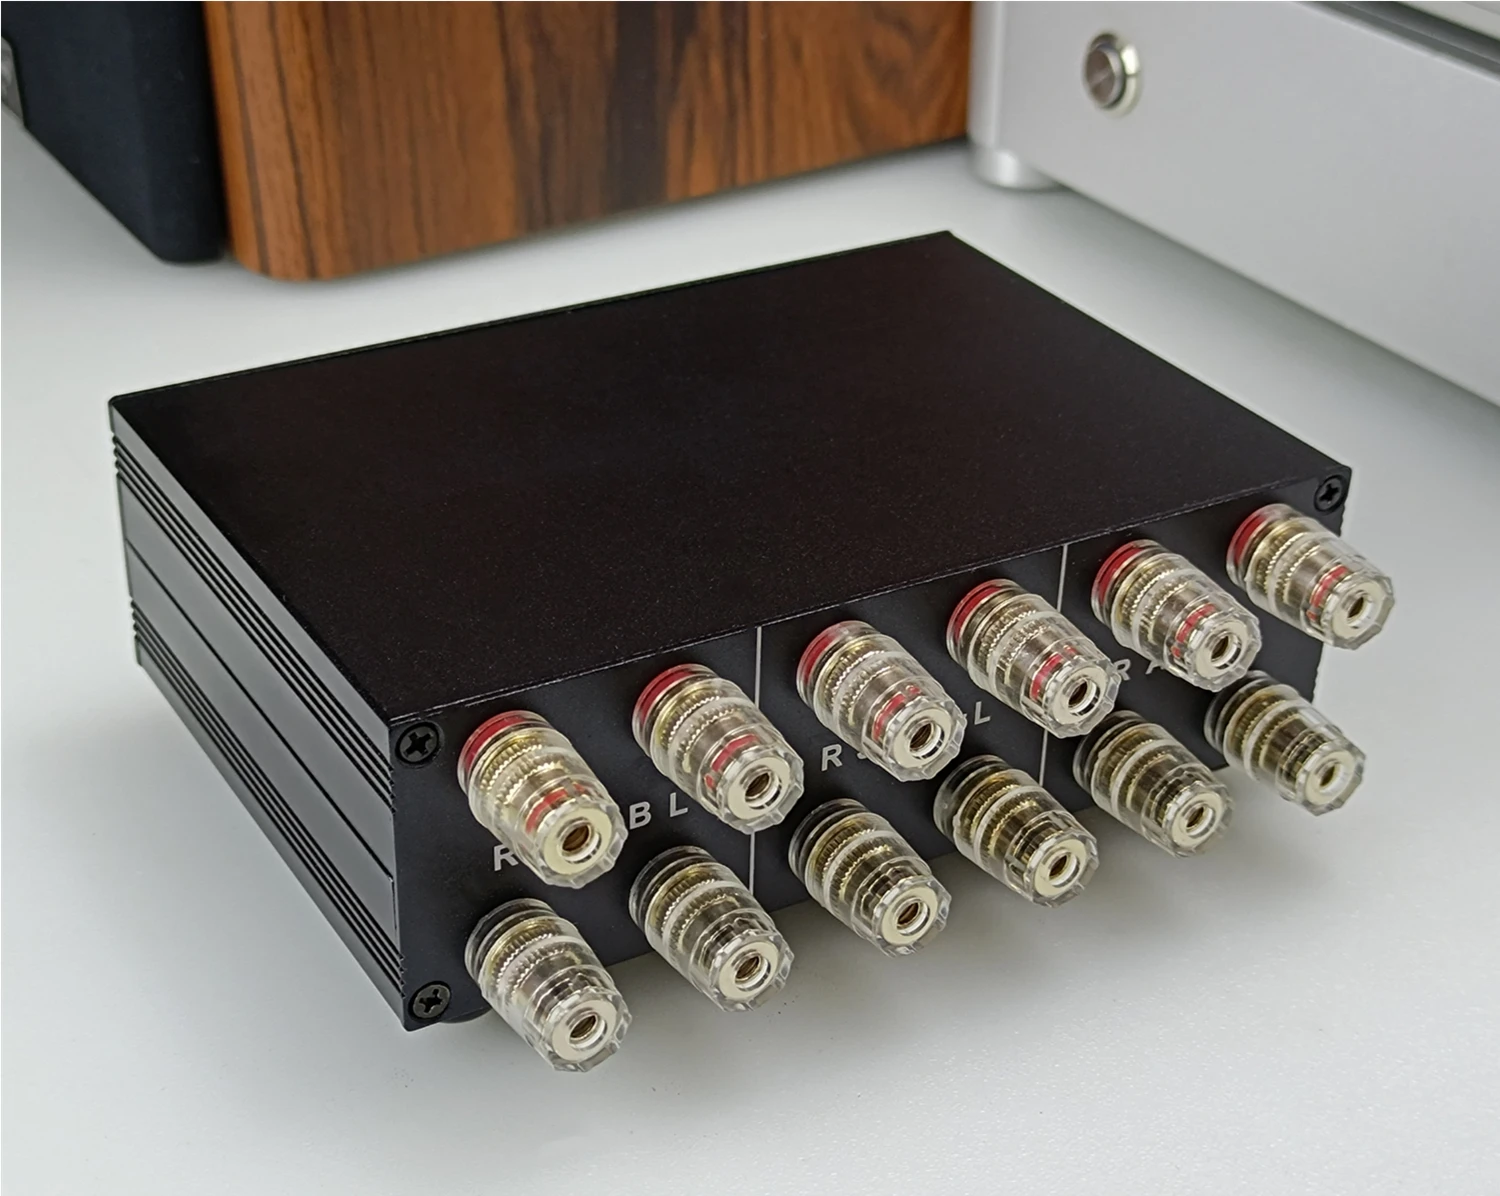 SOLUPEAK P2 2(1)-in-1(2)-Out Amp Amplifier Speaker Switcher Selector Switch Splitter 2-Way loudspeaker Control Combiner Box